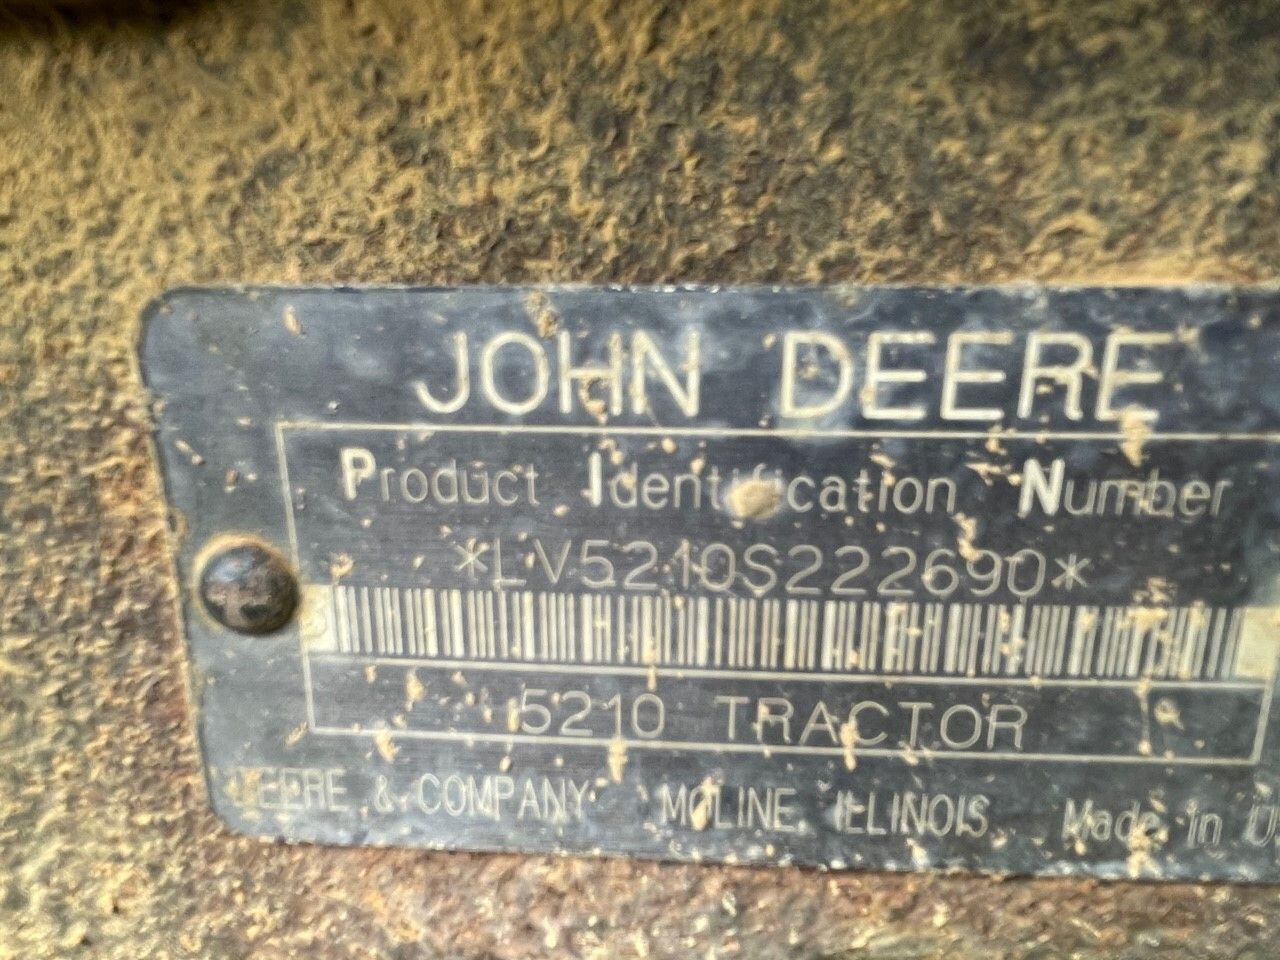 1999 John Deere 5210